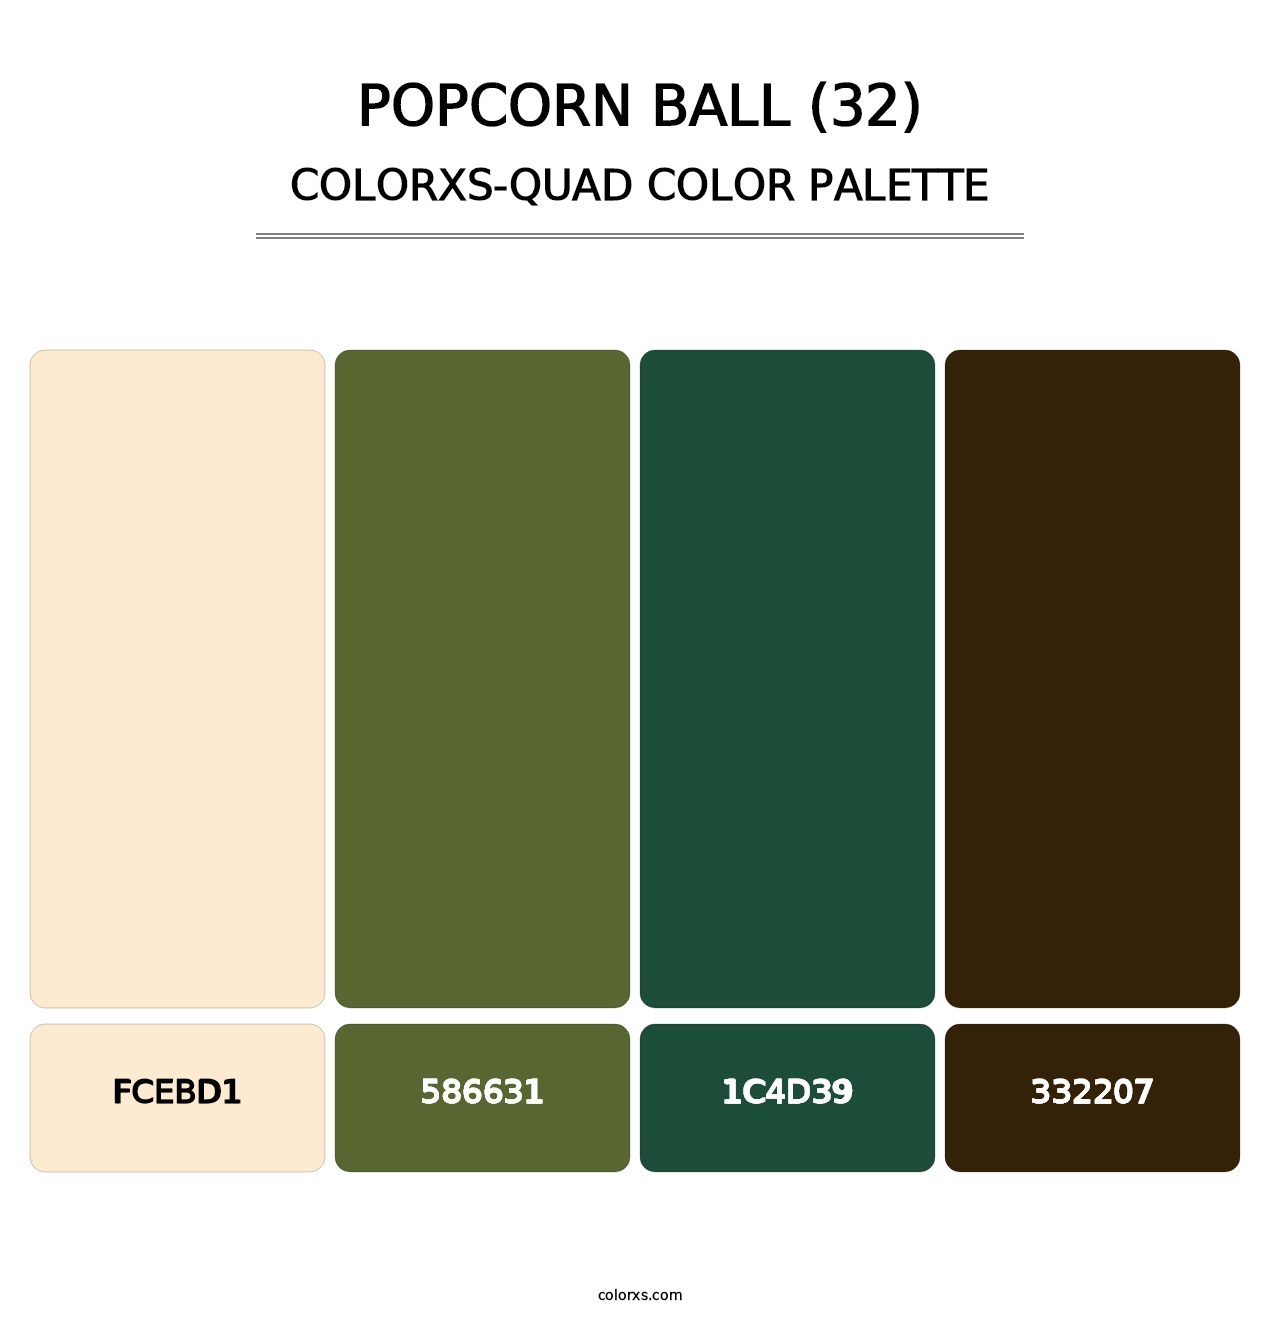 Popcorn Ball (32) - Colorxs Quad Palette